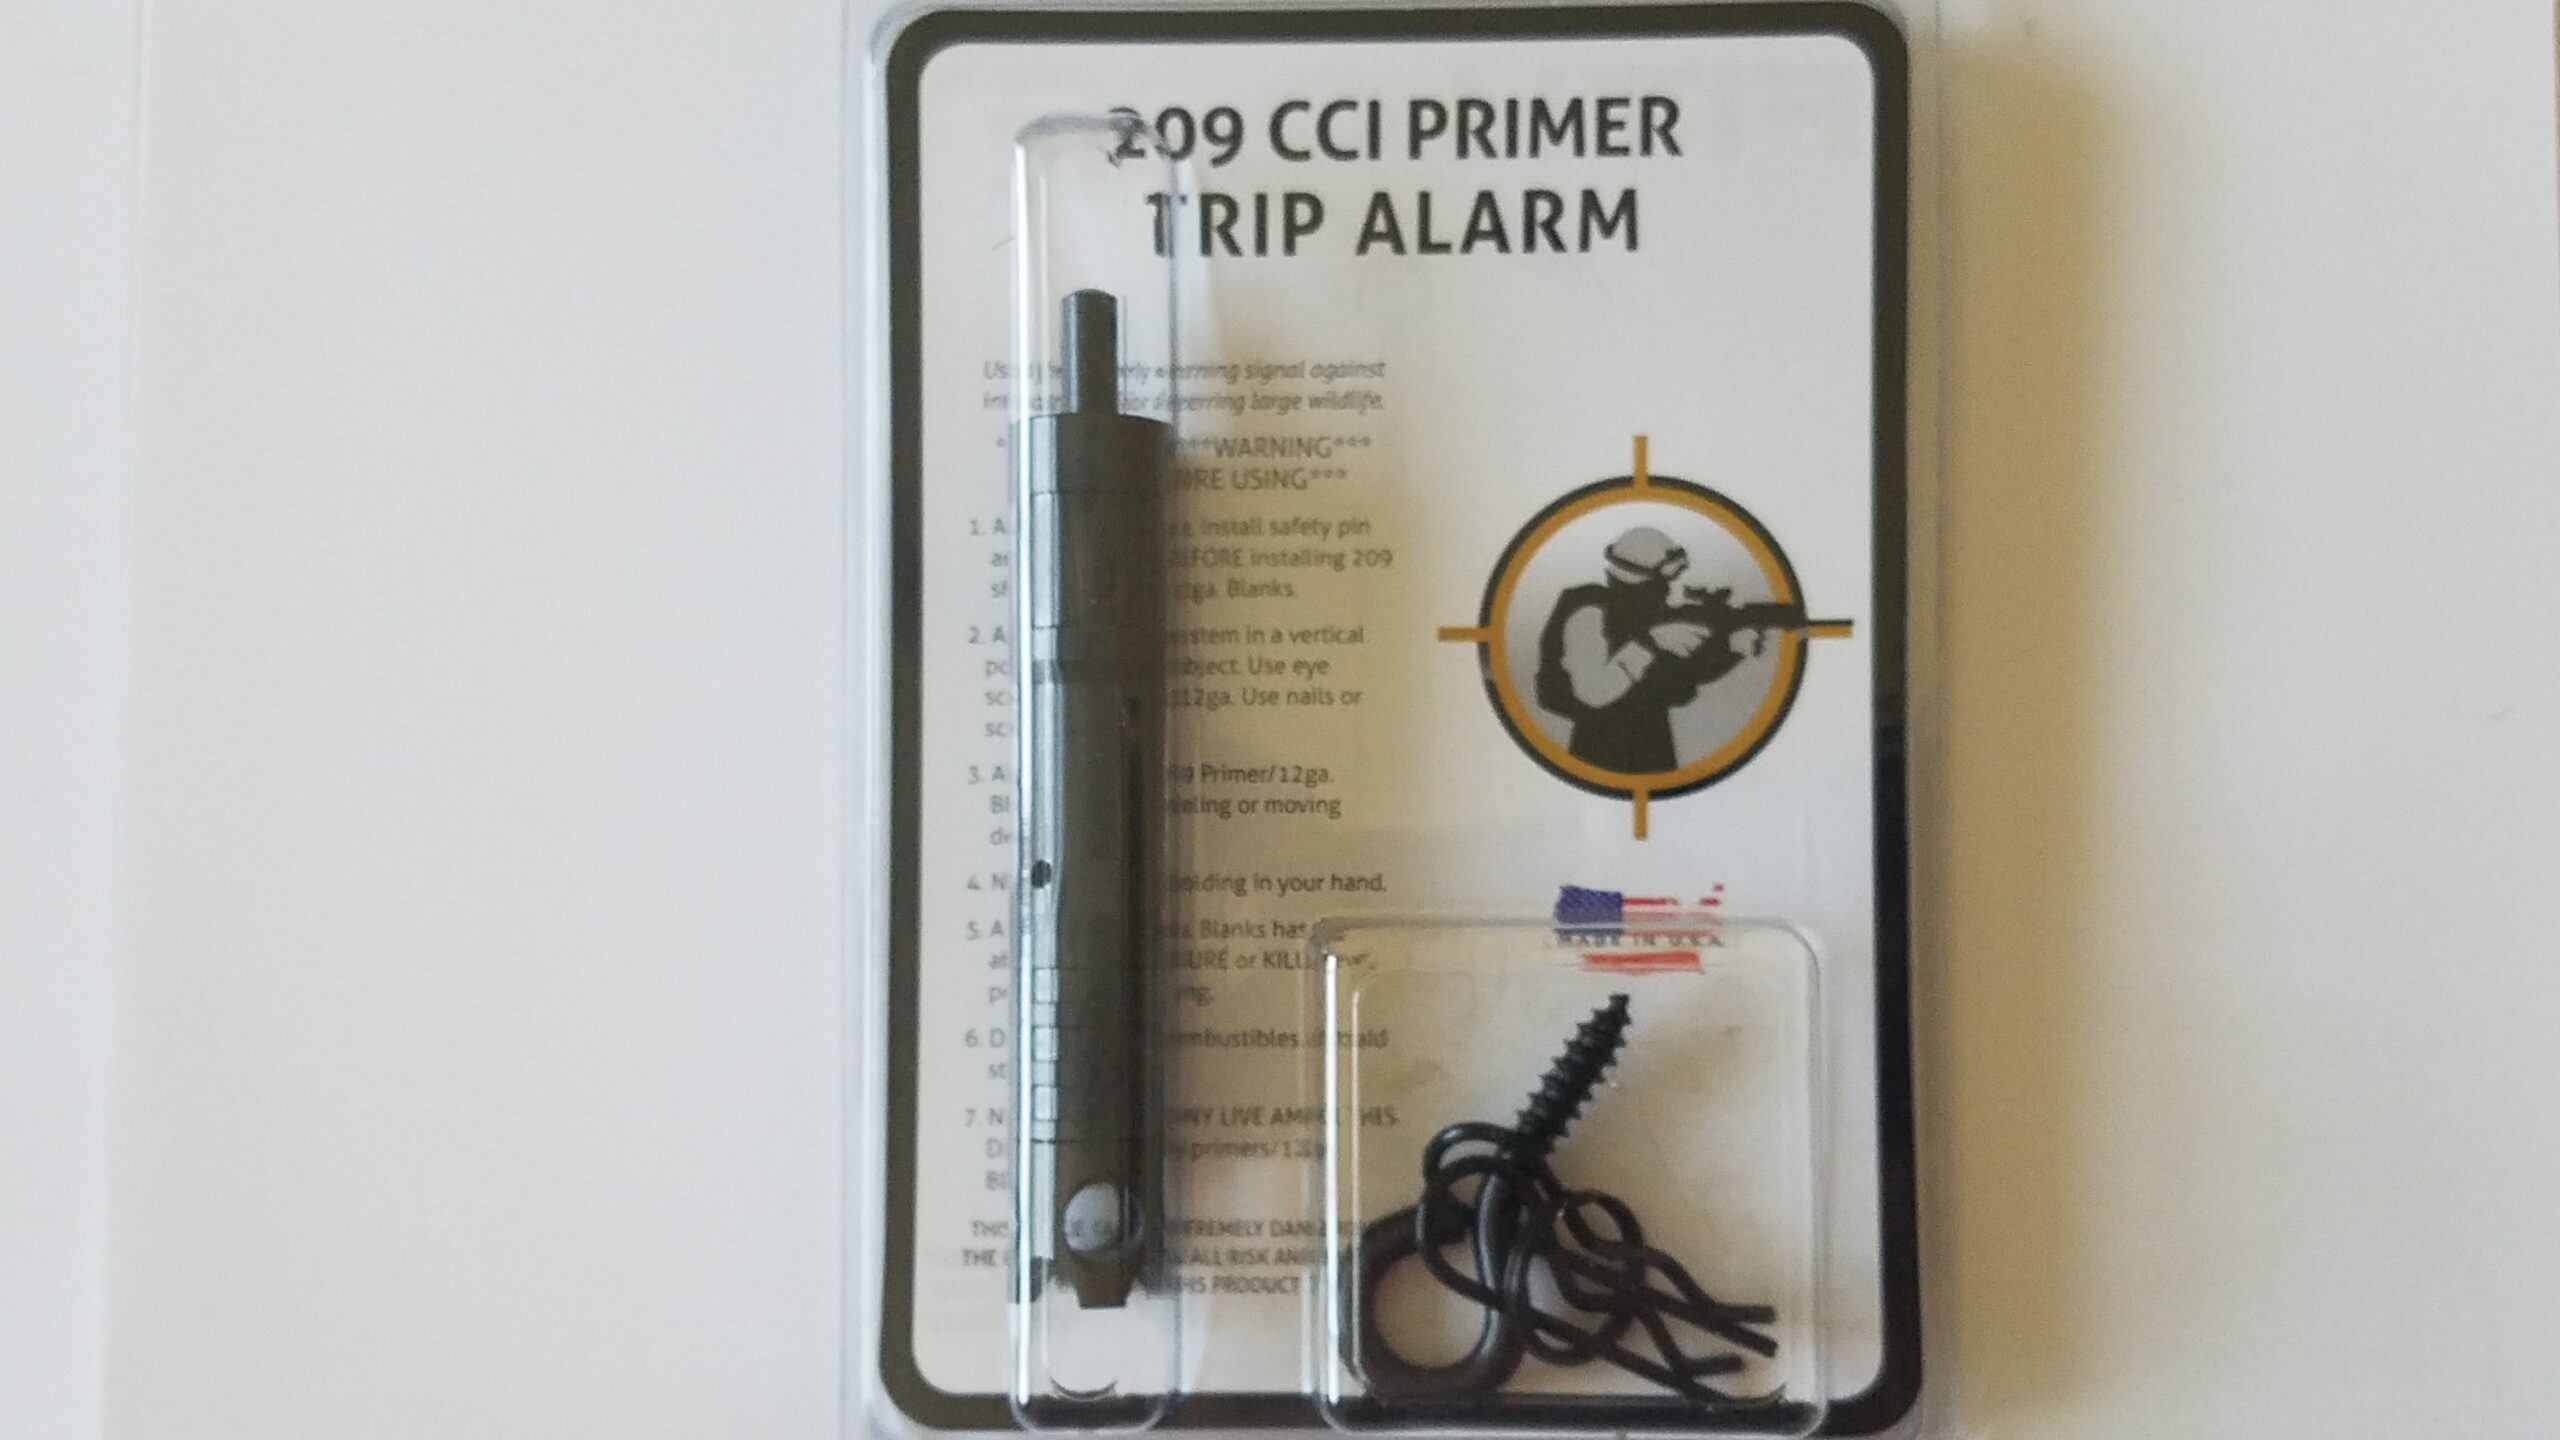 Fith ops perimeter alarm tripwire alarm 12 ga with 209 adapter.